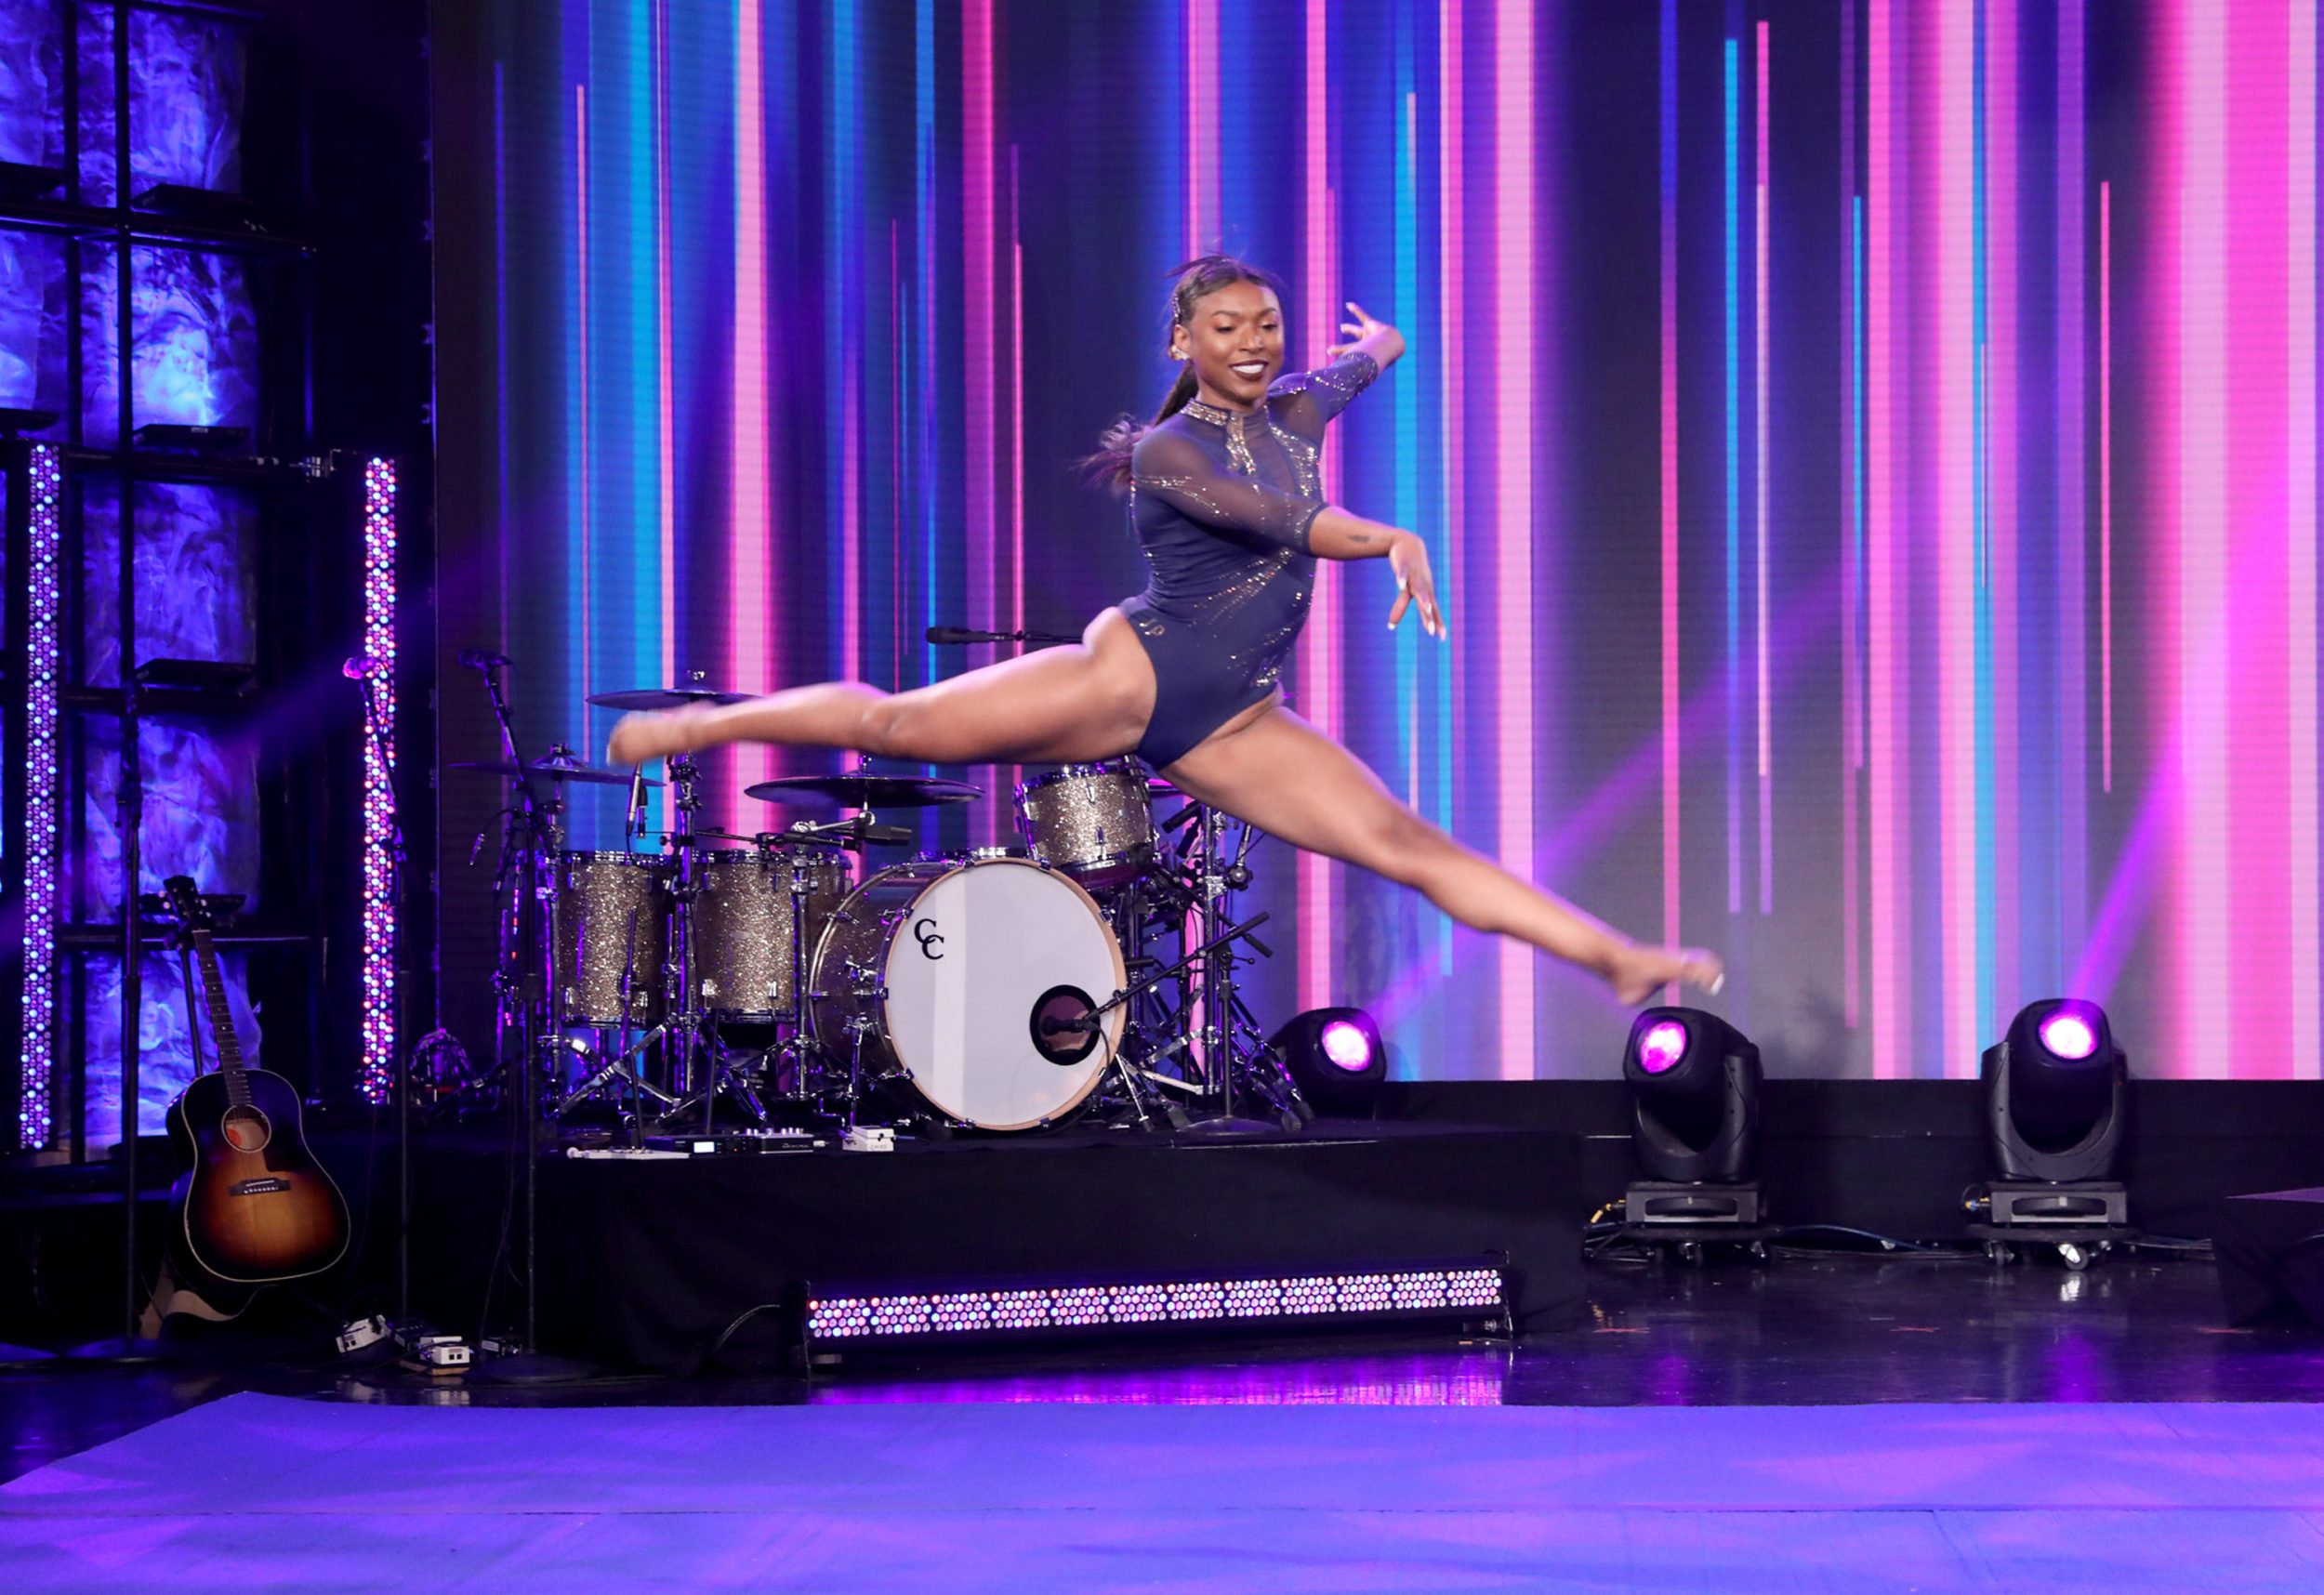 Ucla Gymnast Nia Dennis Appears On Ellen Degeneres Show